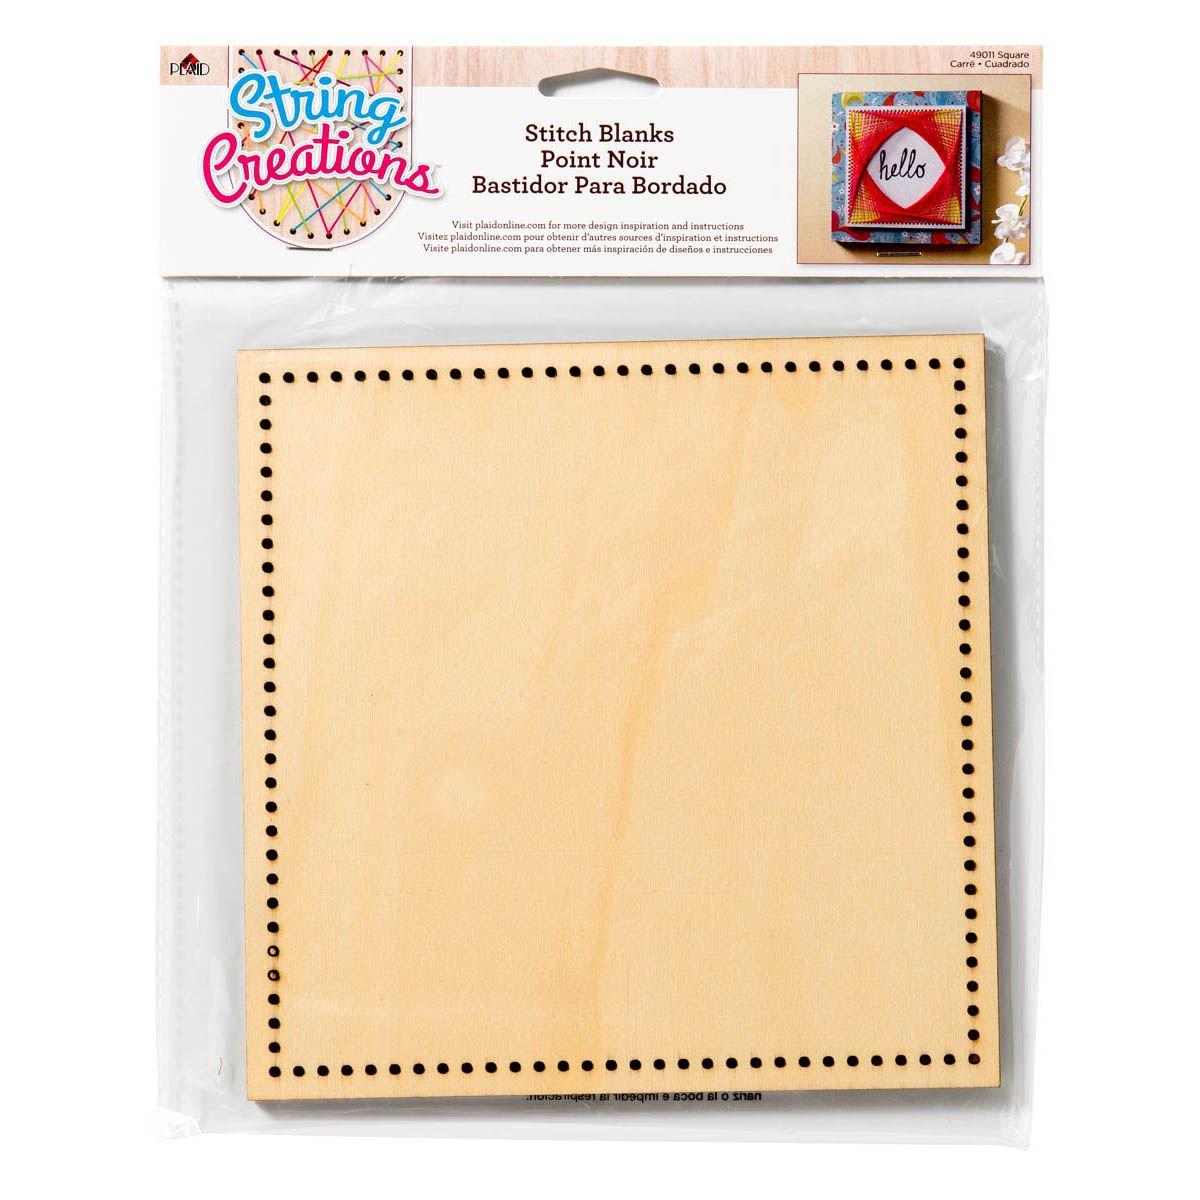 Bucilla ® String Creations™ Stitch Blanks - Square, Border Grid - 49011